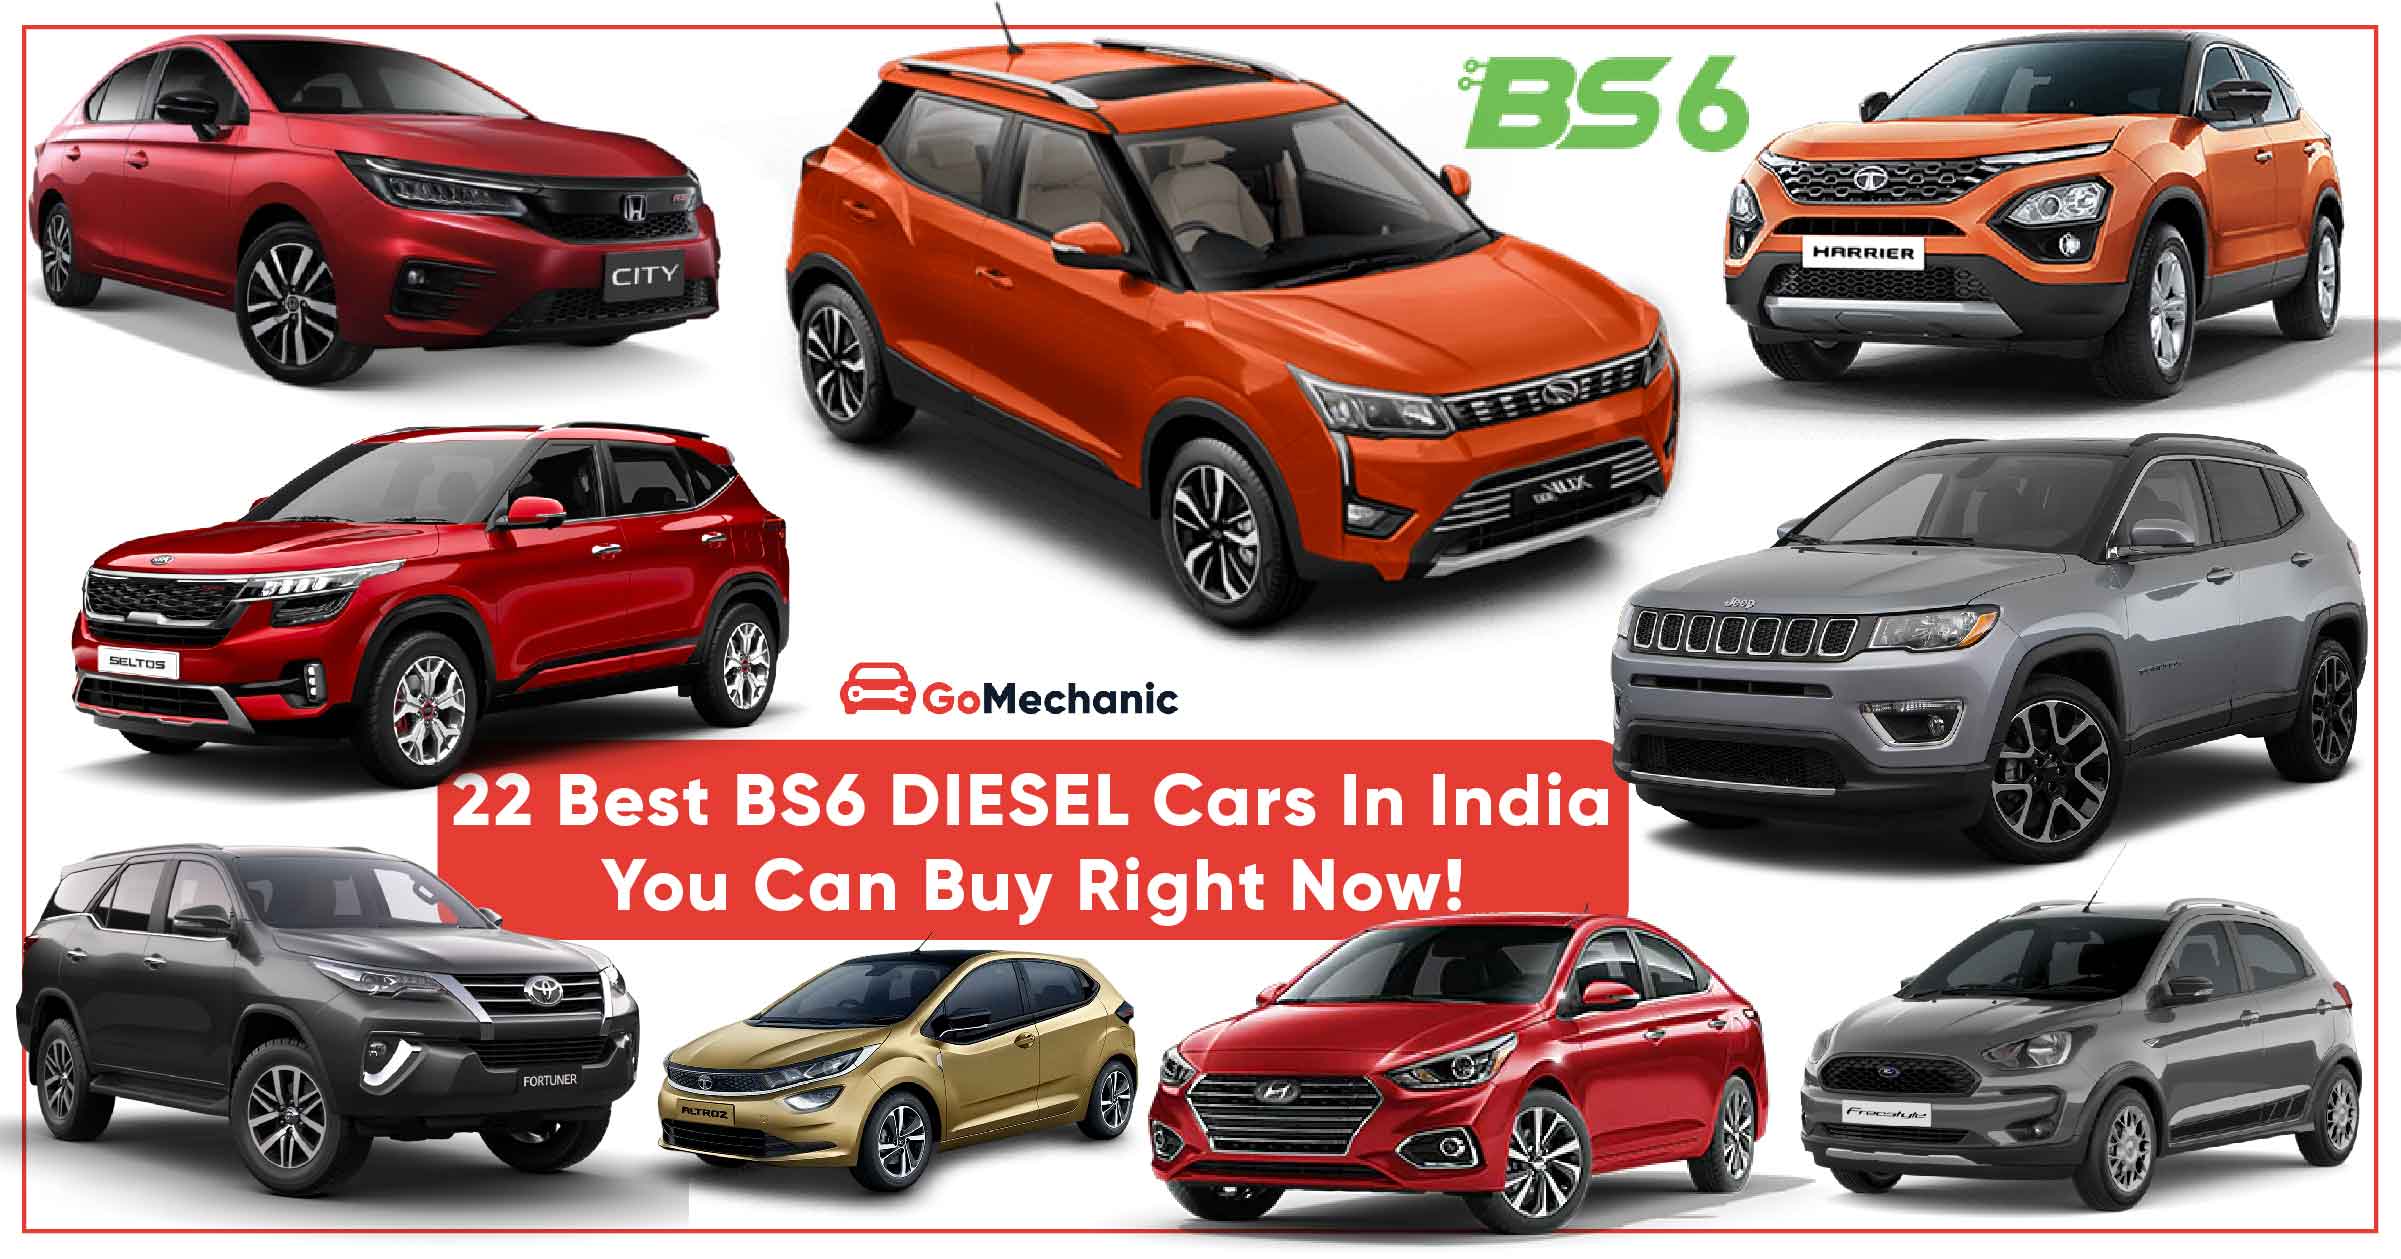 BS6 Mahindra Bolero - Top 3 exterior highlights - CarWale